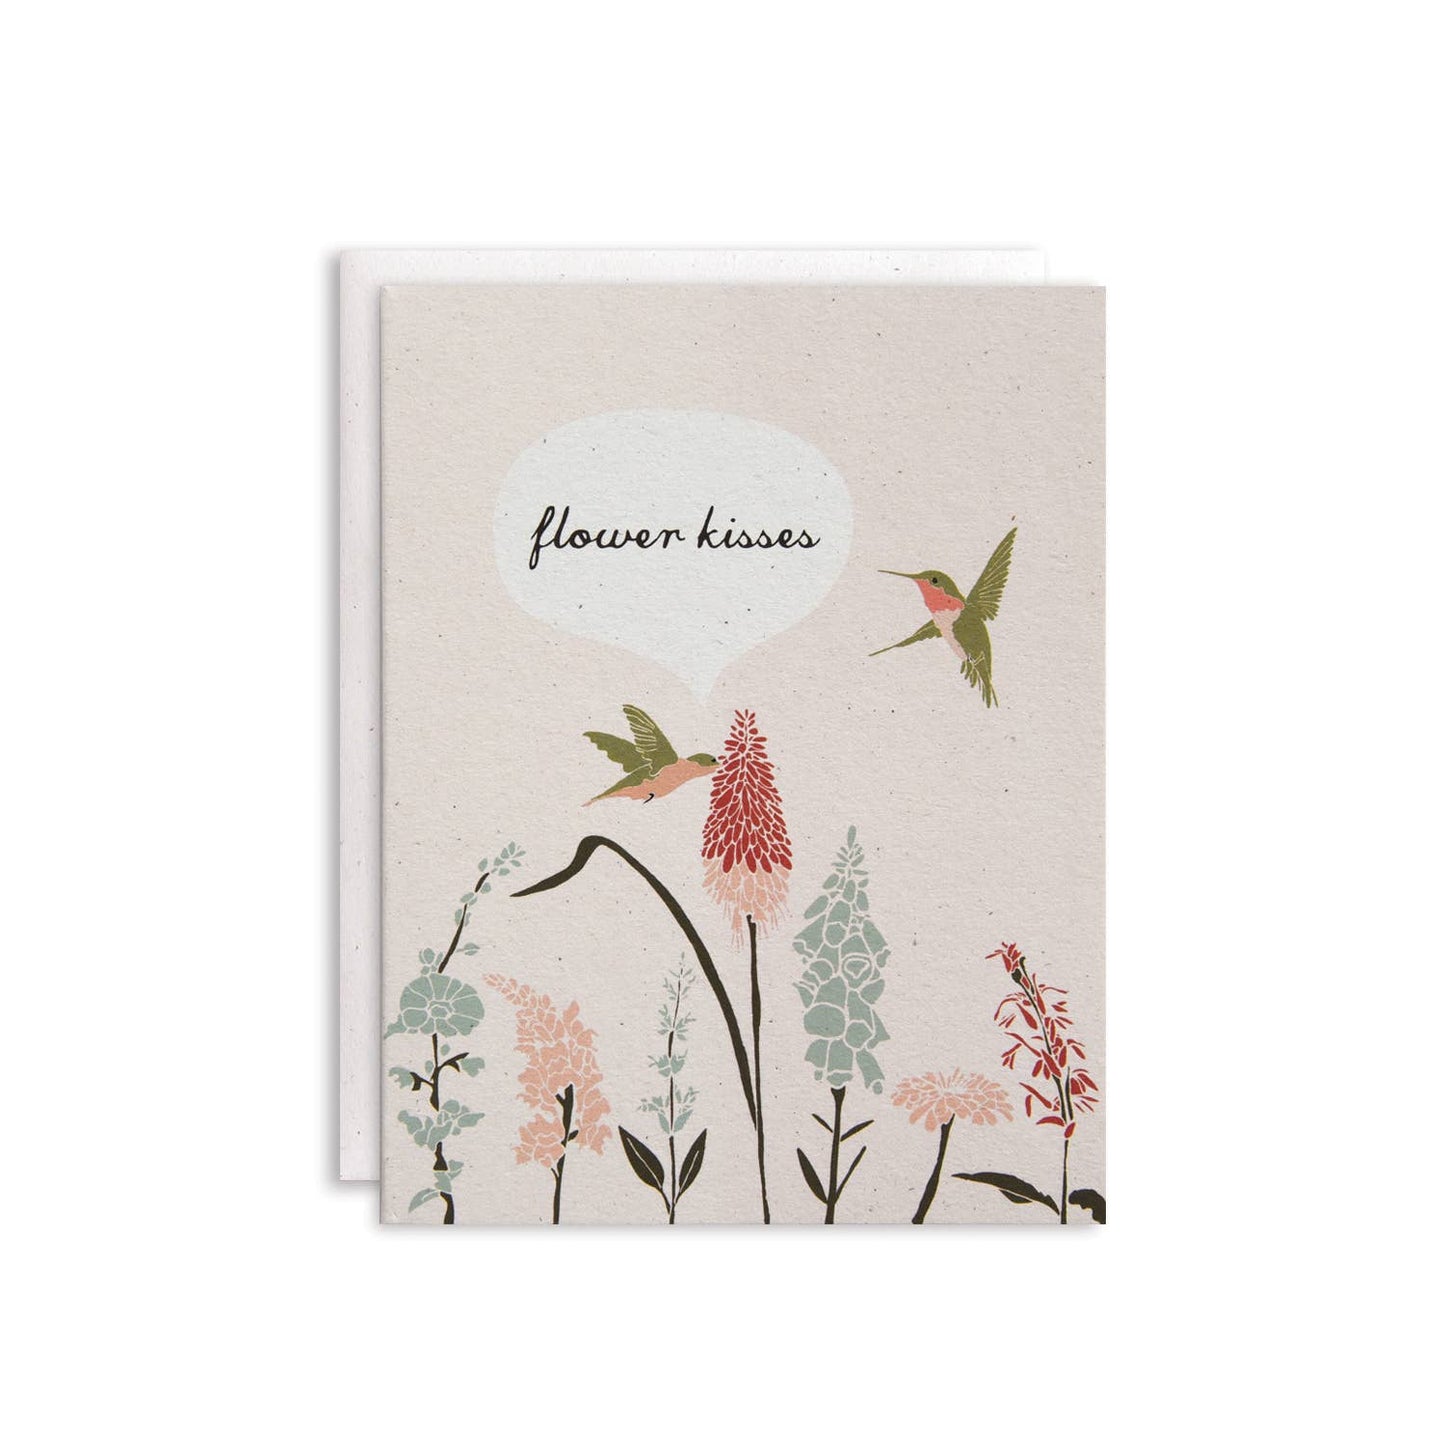 Flower Kisses greeting card box set by June & December